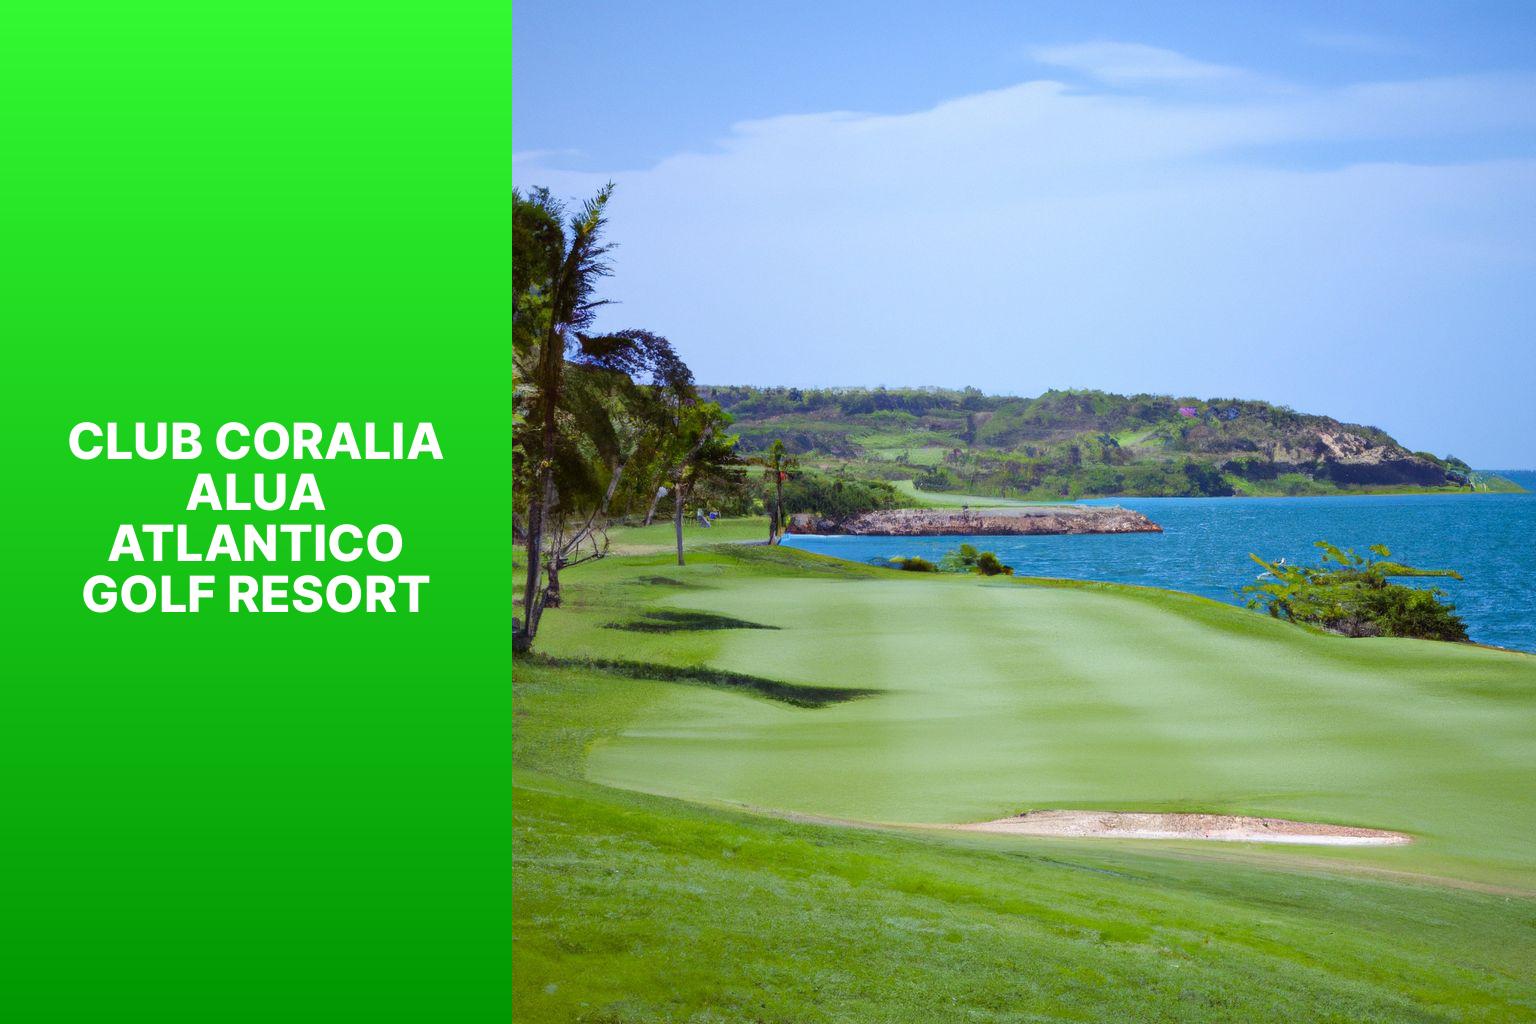 Club Coralia Alua Atlantico Golf Resort